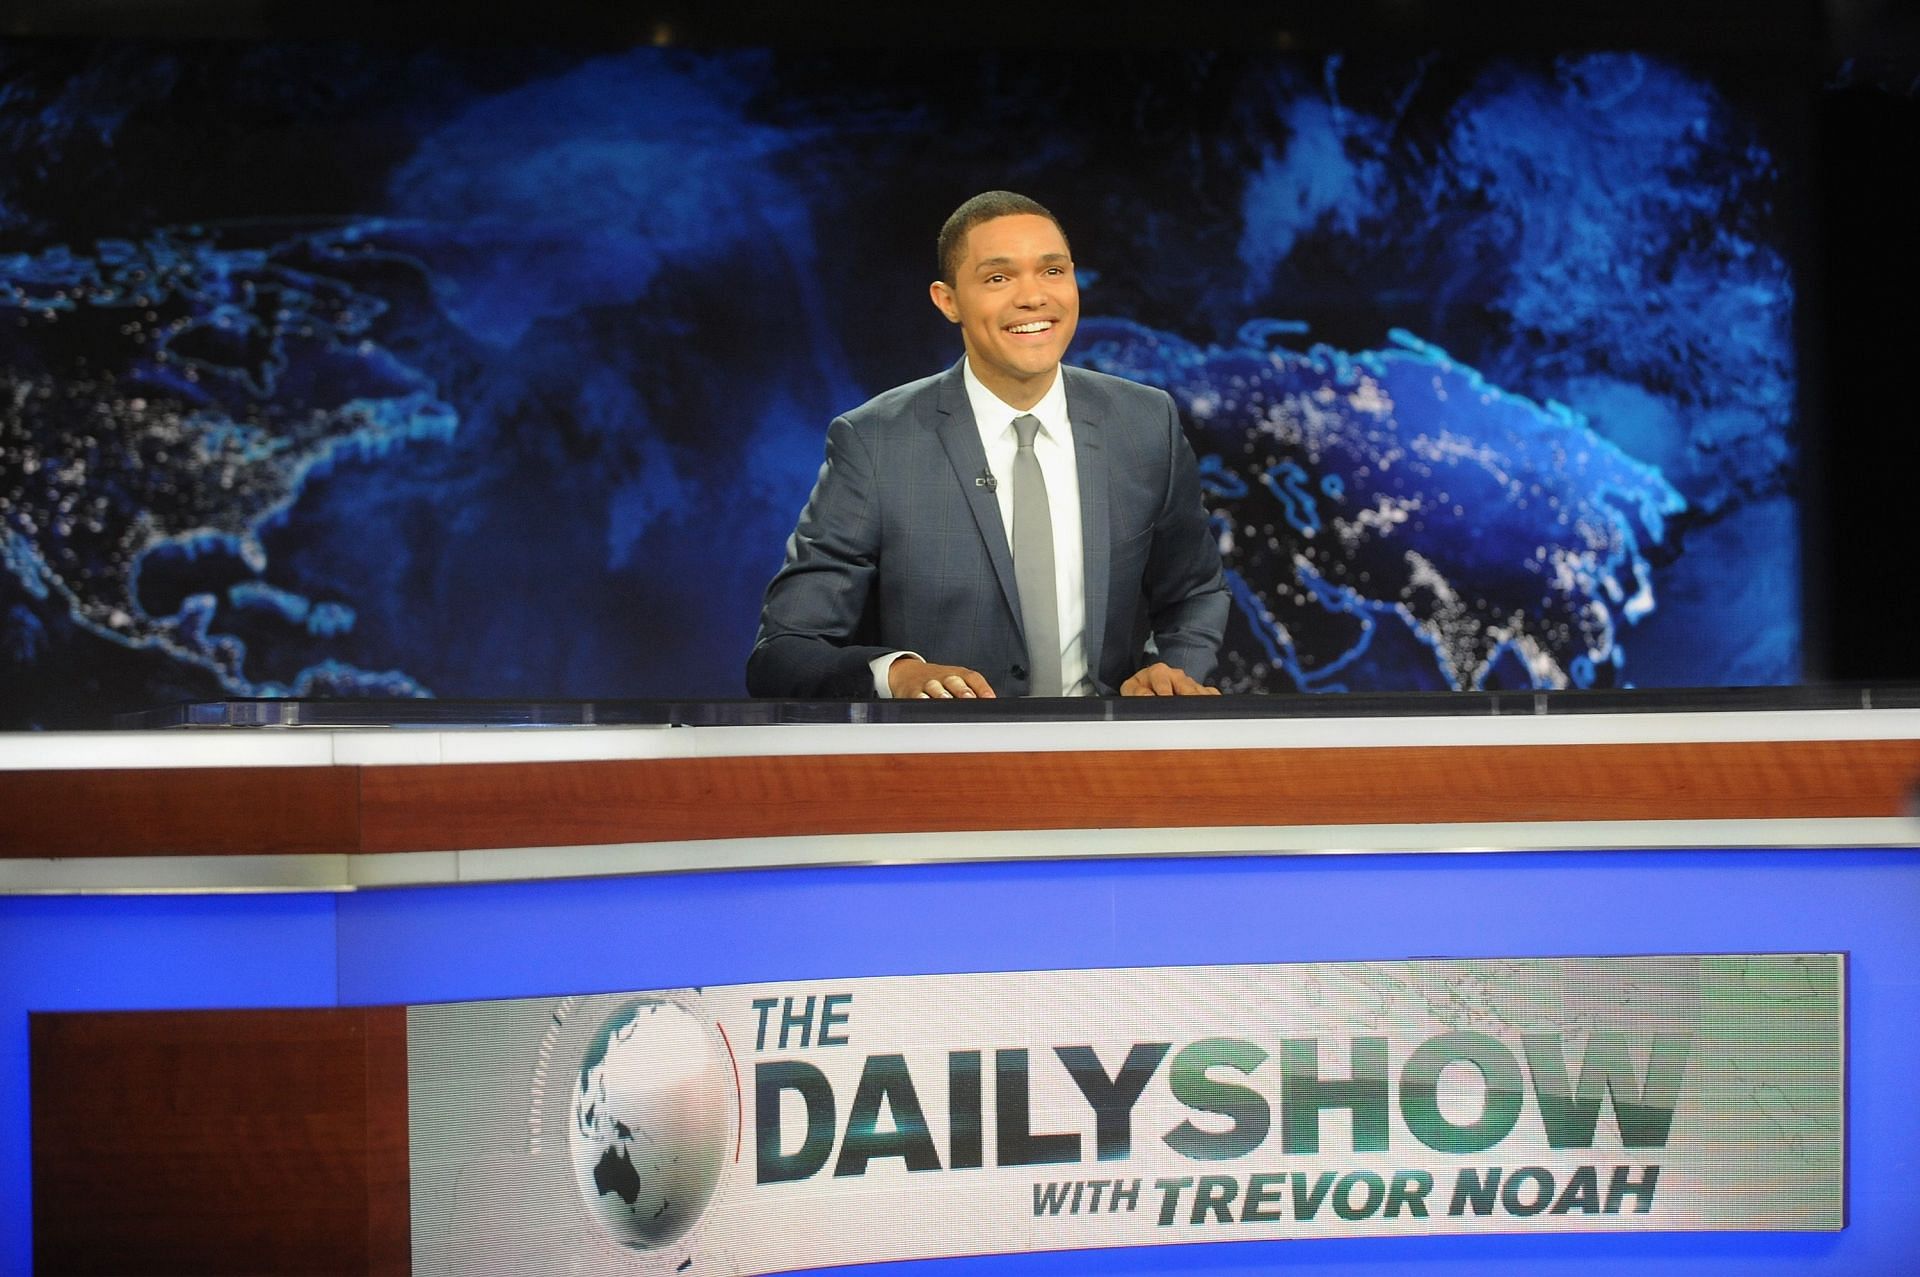 Trevor Noah in The Daily Show with Trevor Noah (Image via Comedy Central)